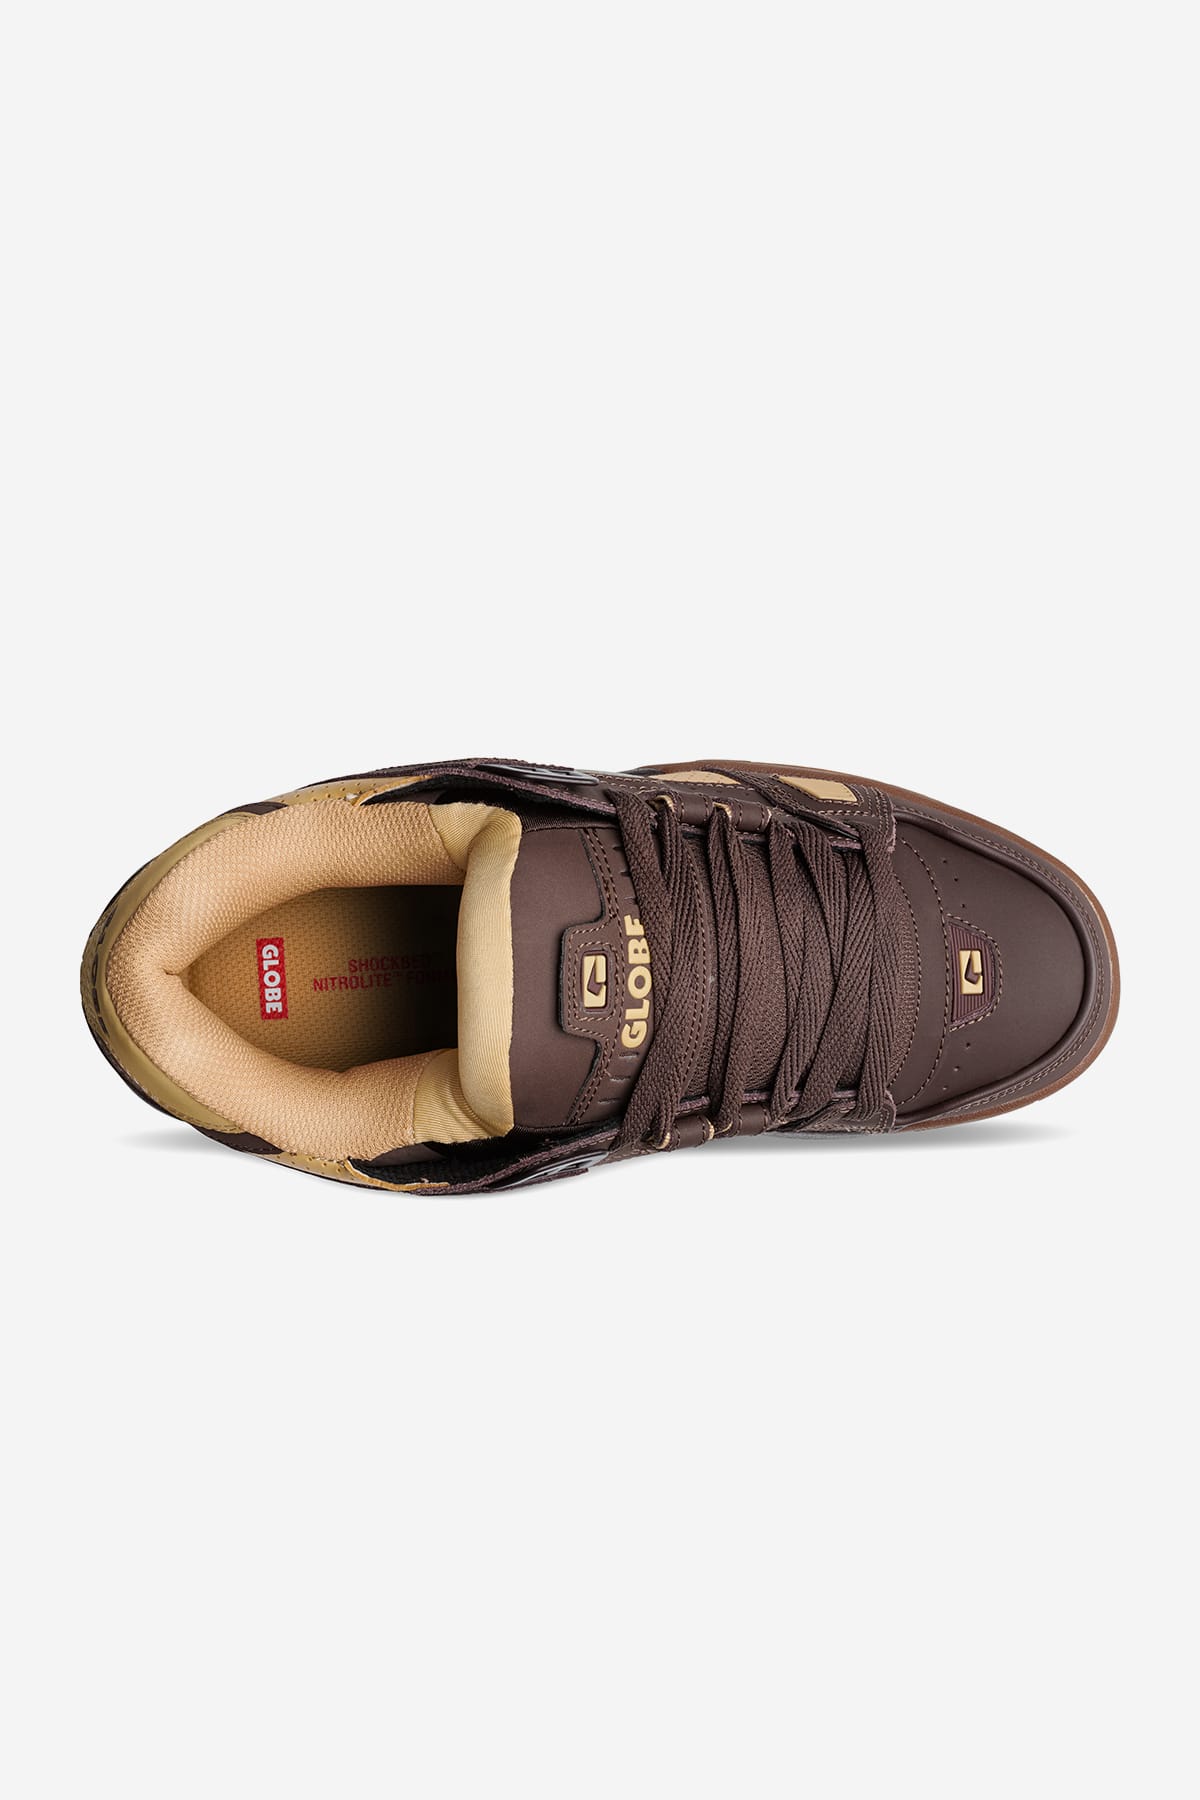 sabre dark oak curry skate shoes